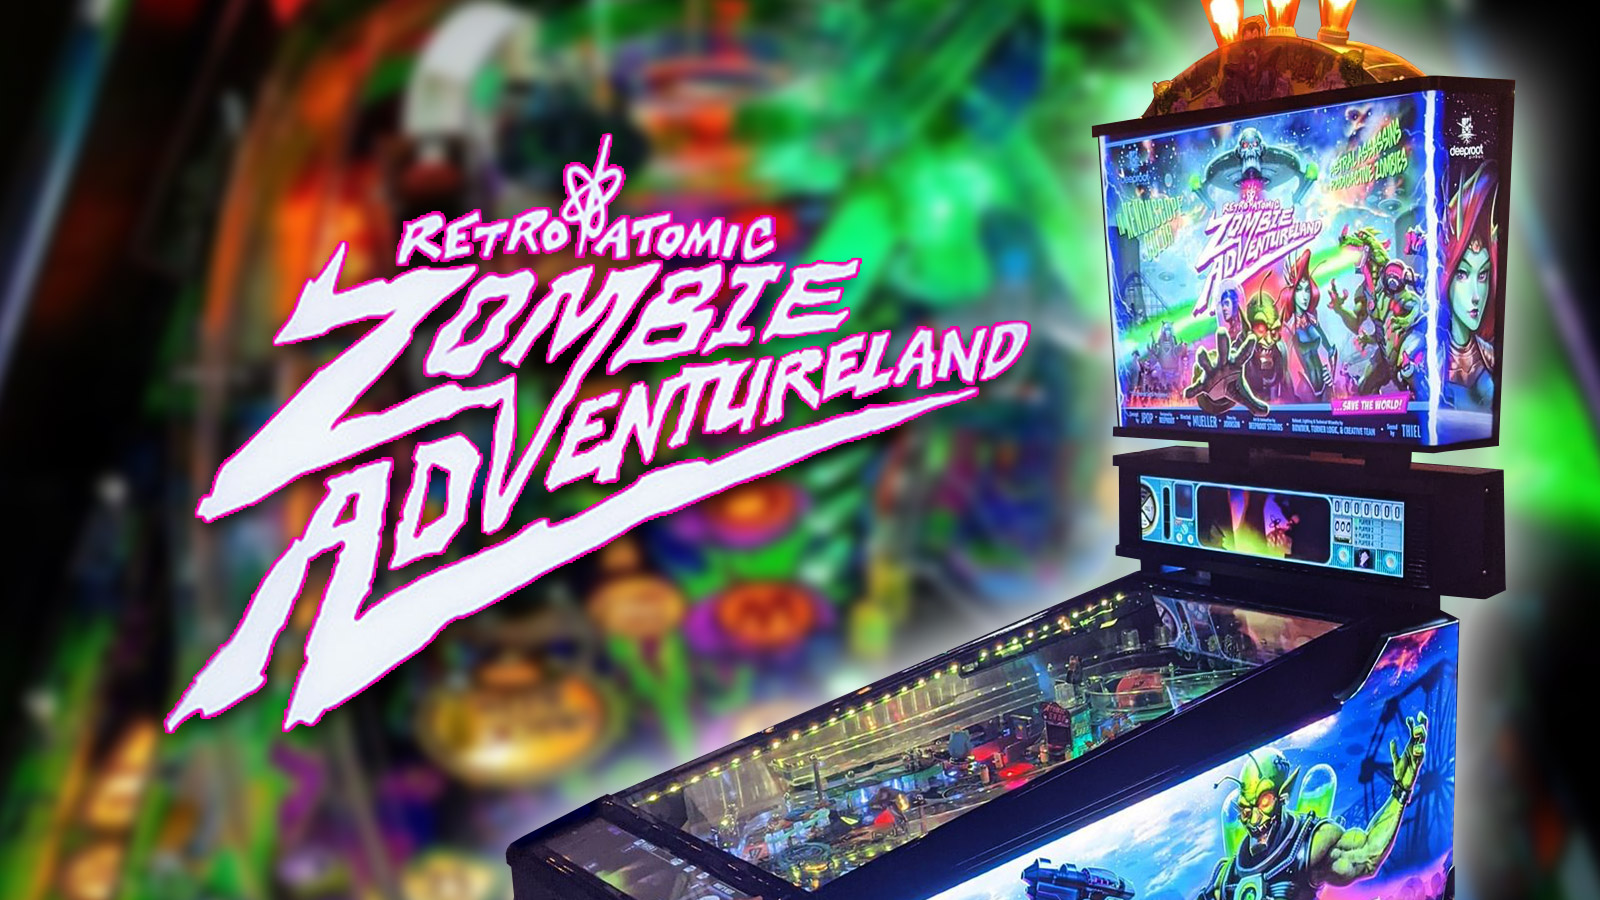 Latest Retro Atomic Zombie Adventureland Shown Welcome To Pinball News First Free